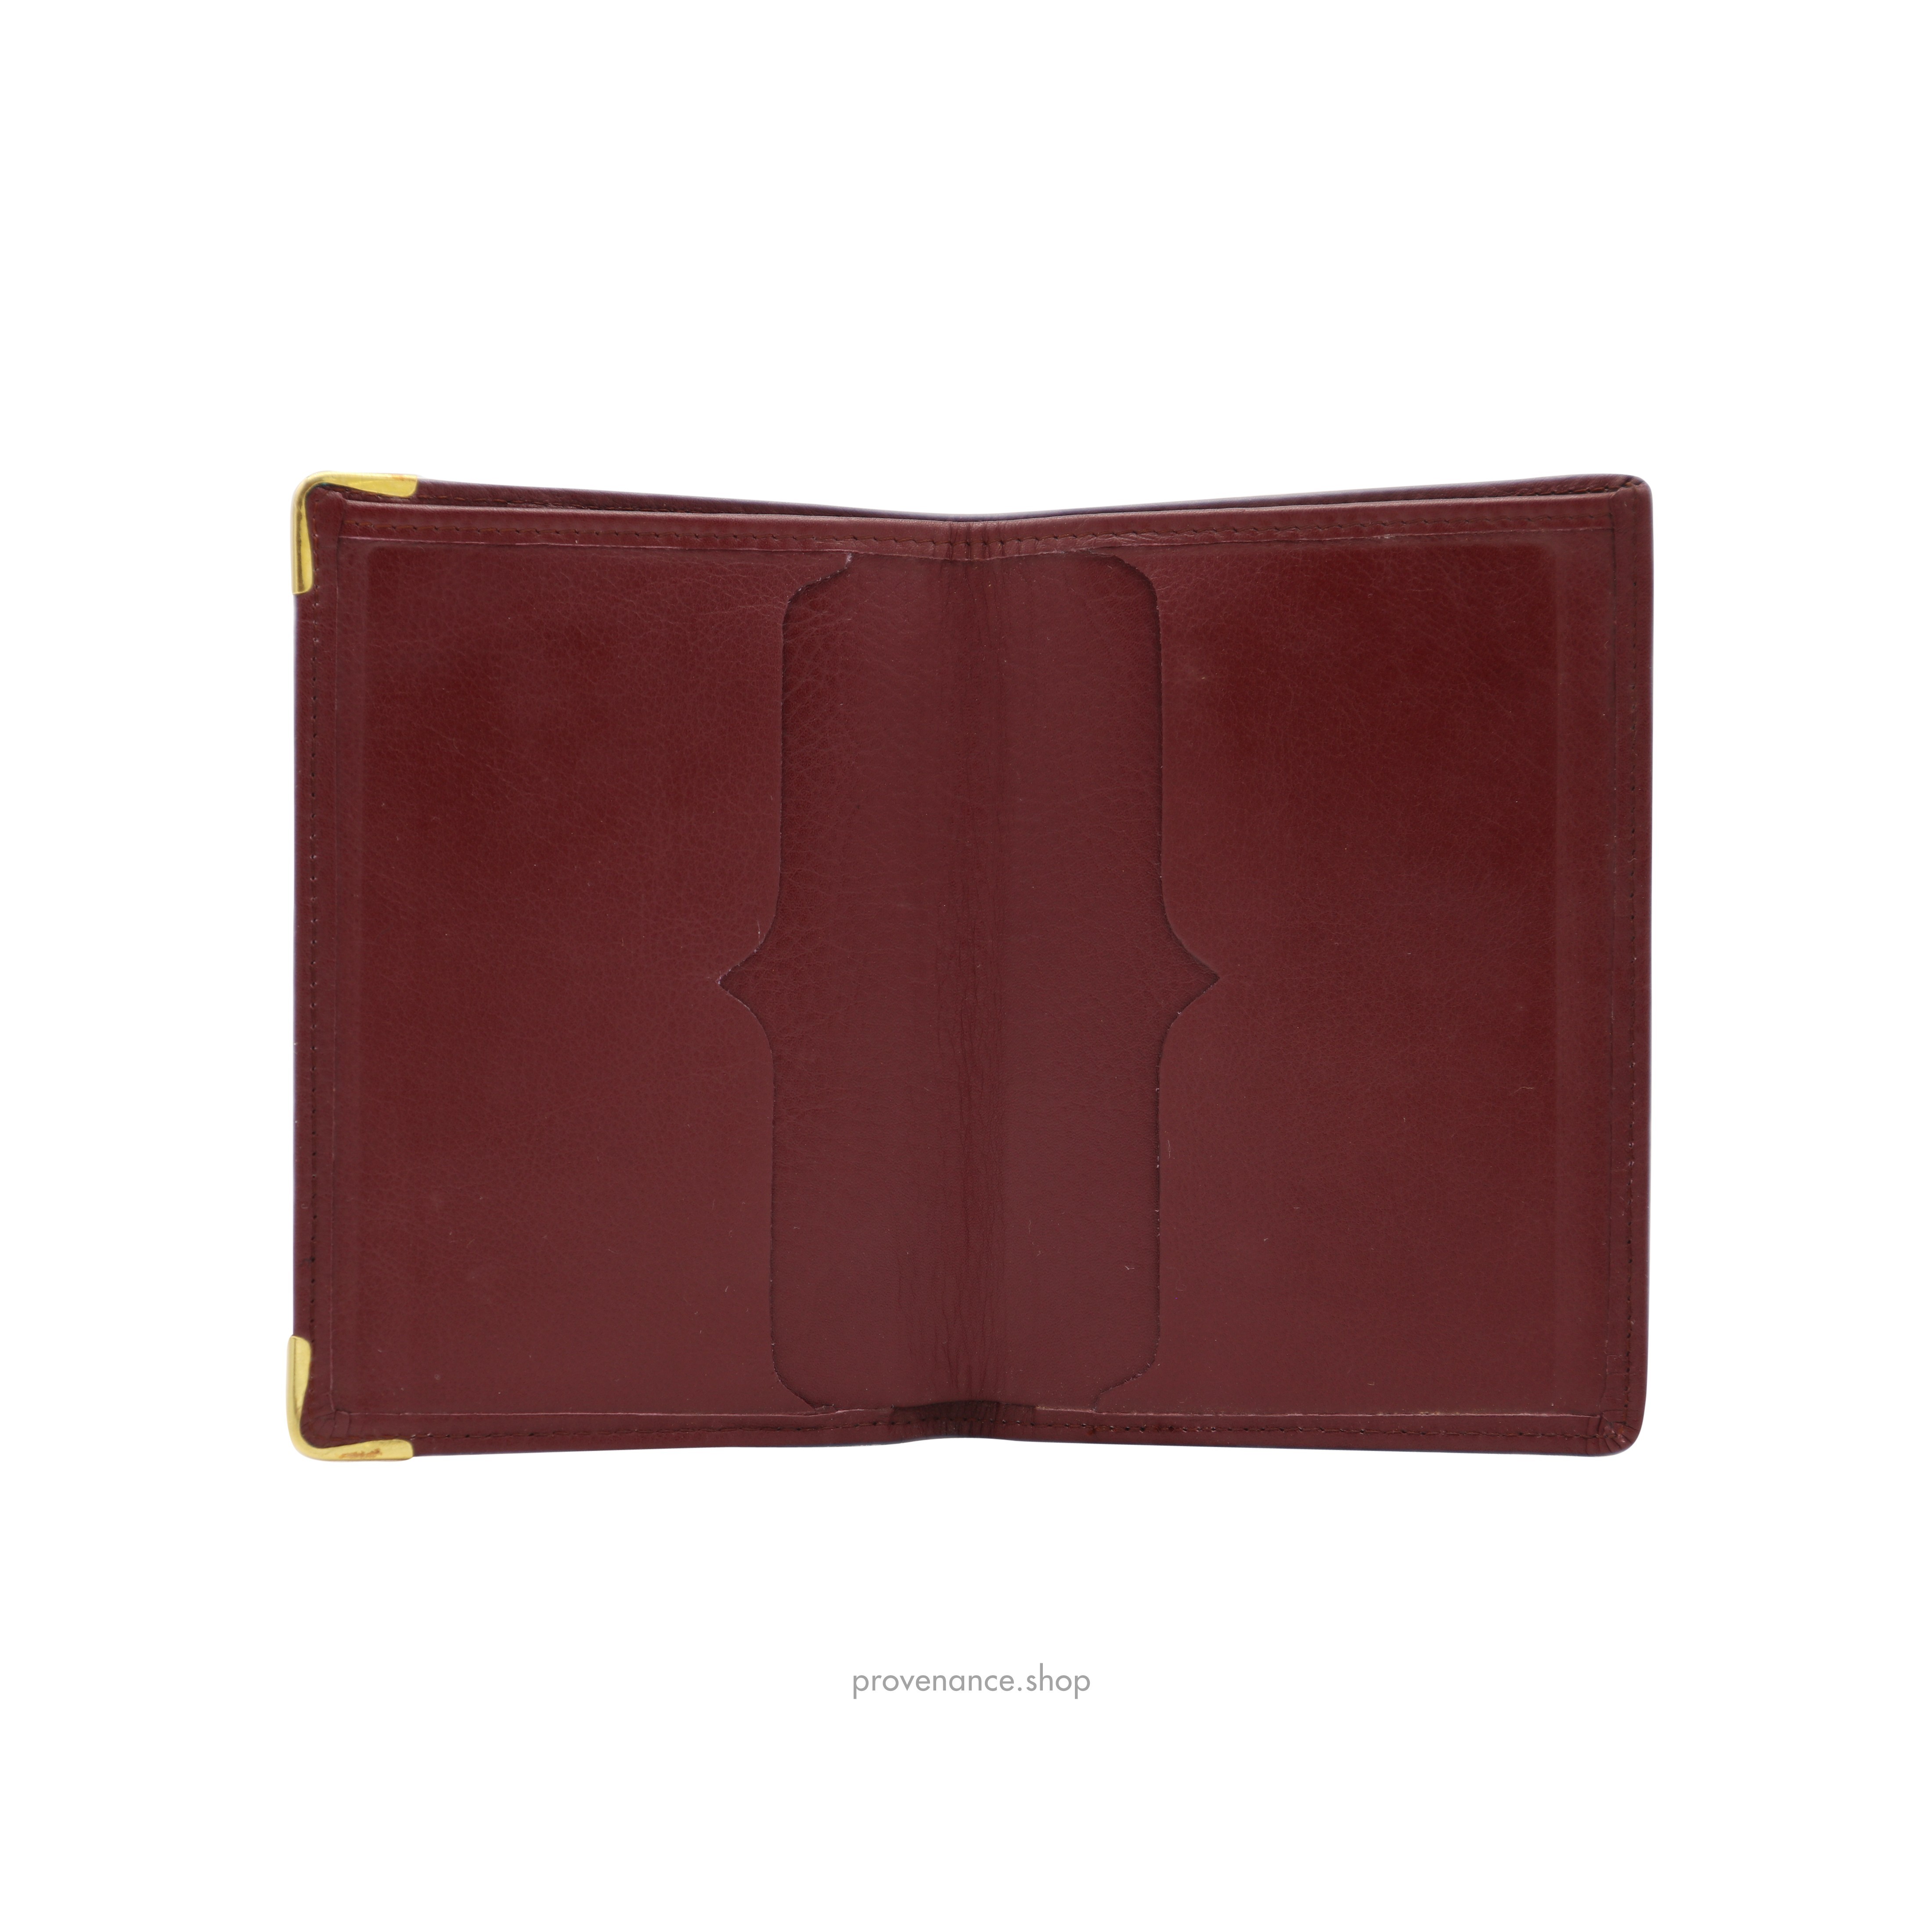 Cartier Passport Holder Wallet - Burgundy Leather - 5